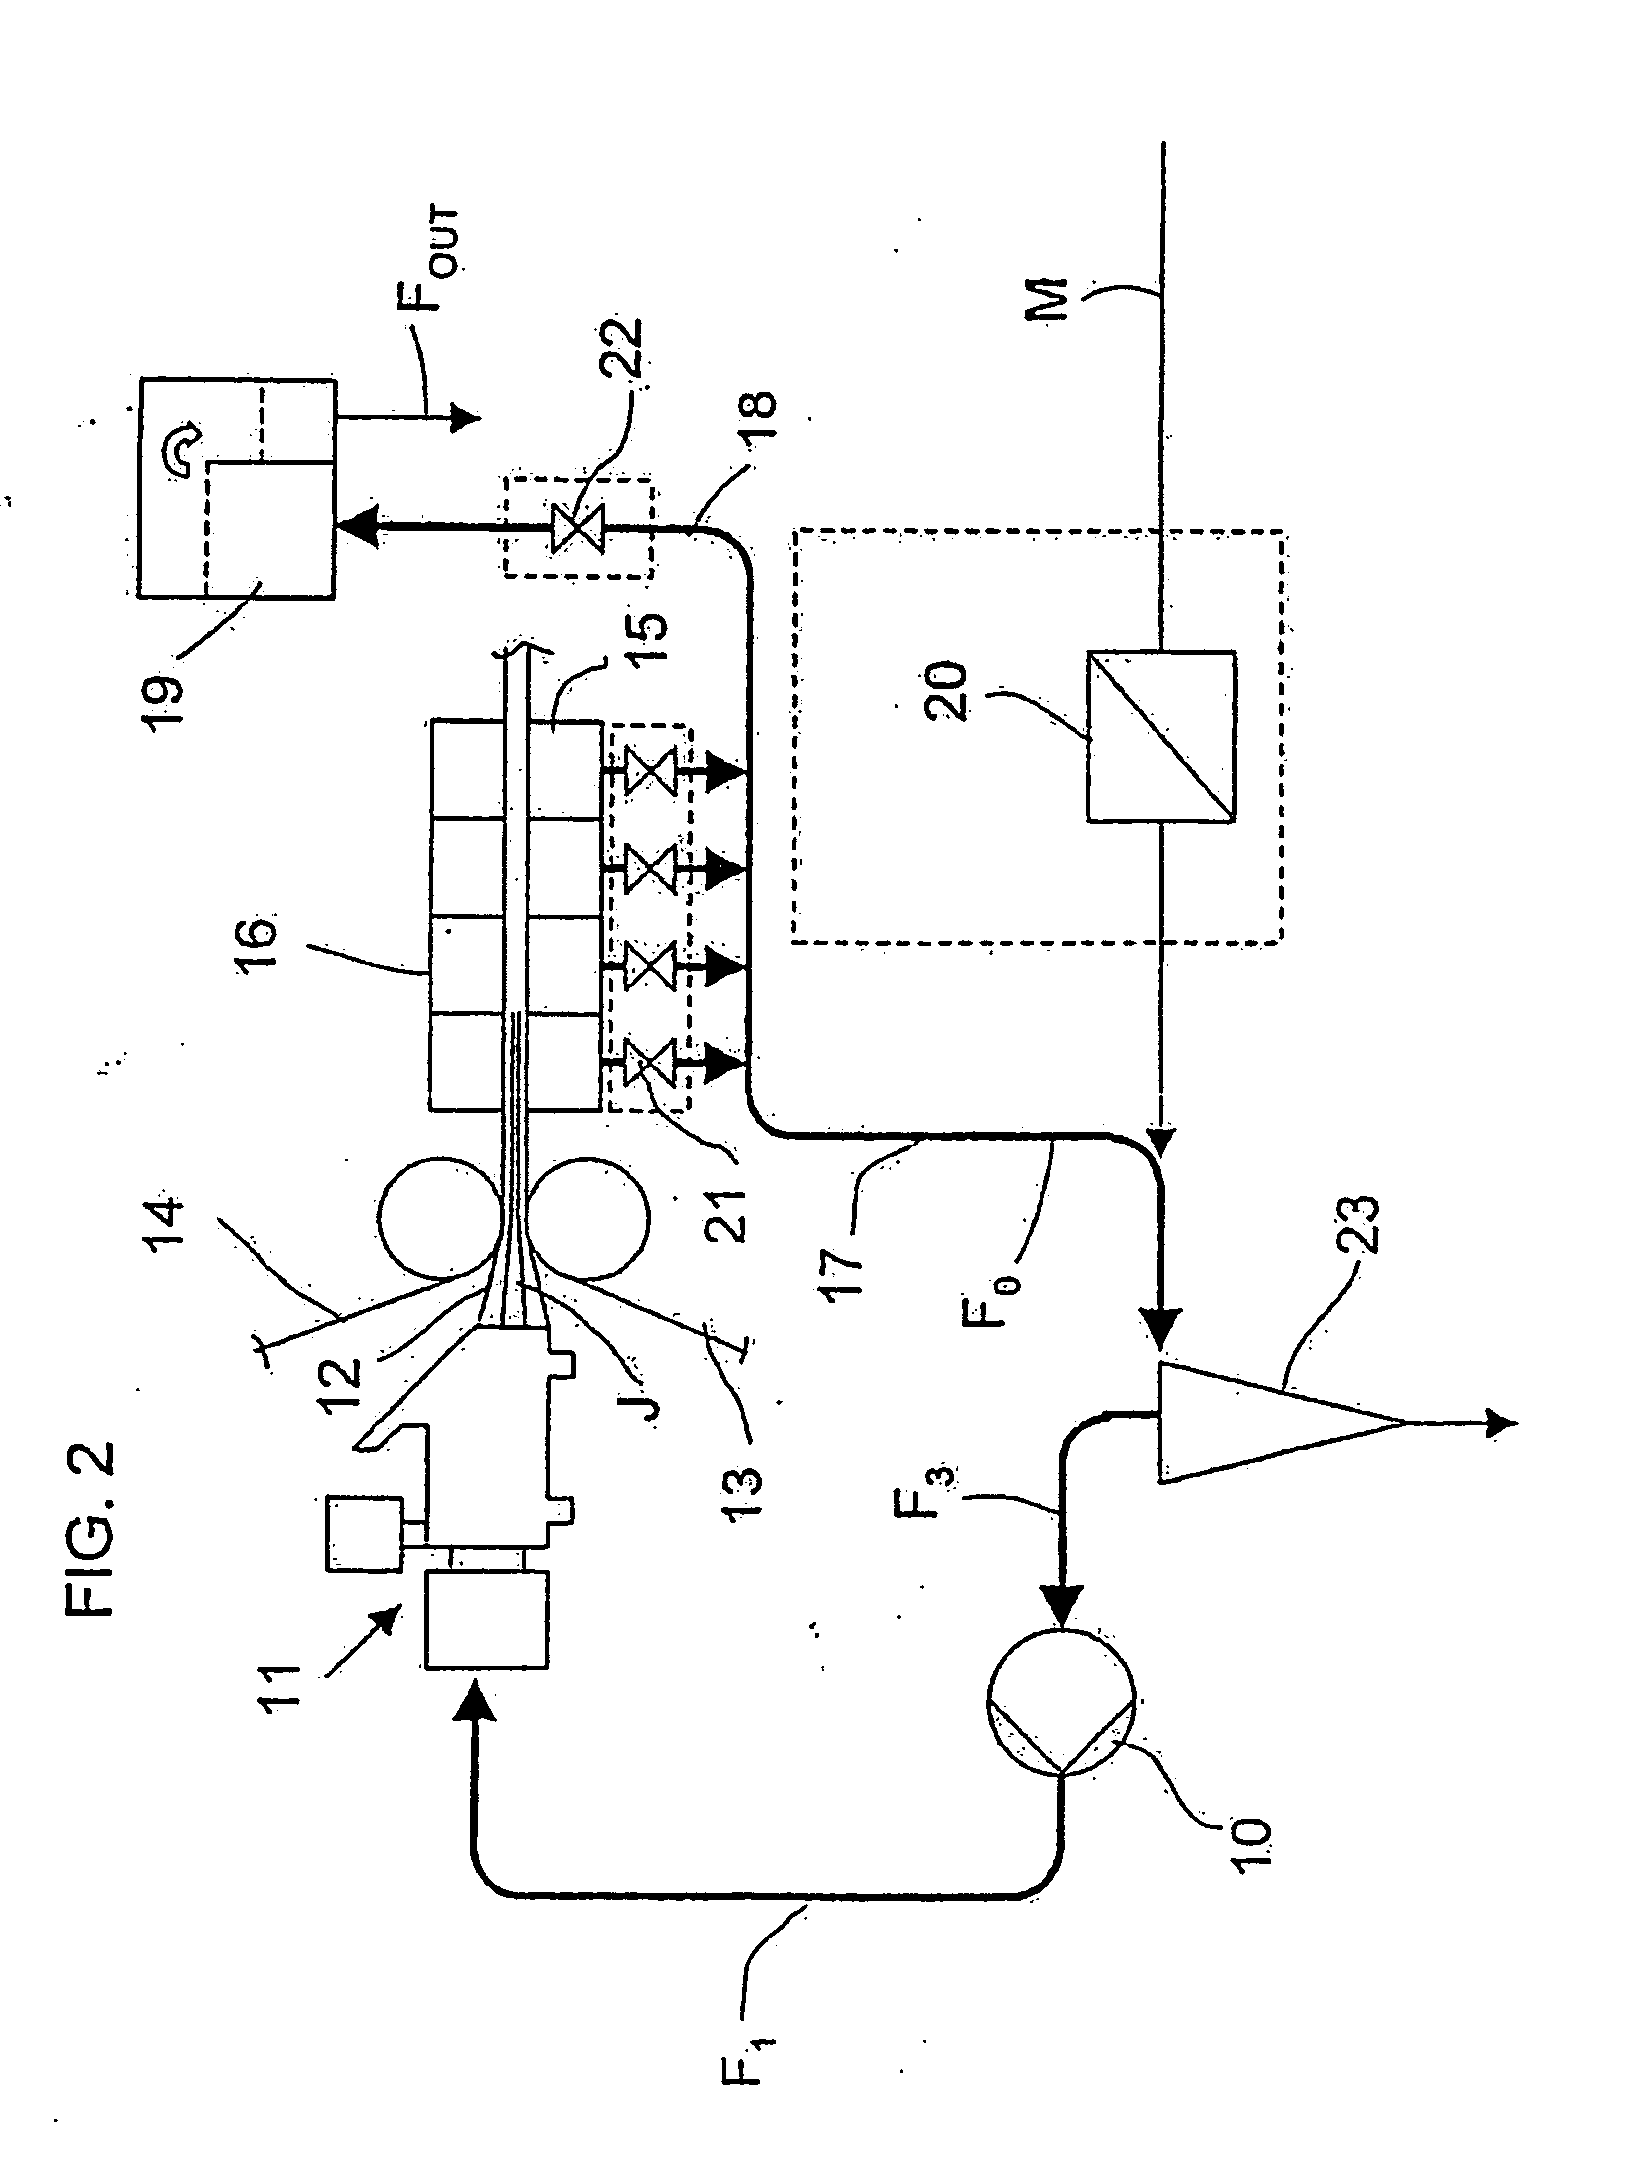 Process arrangement in the short circulation of a paper machine